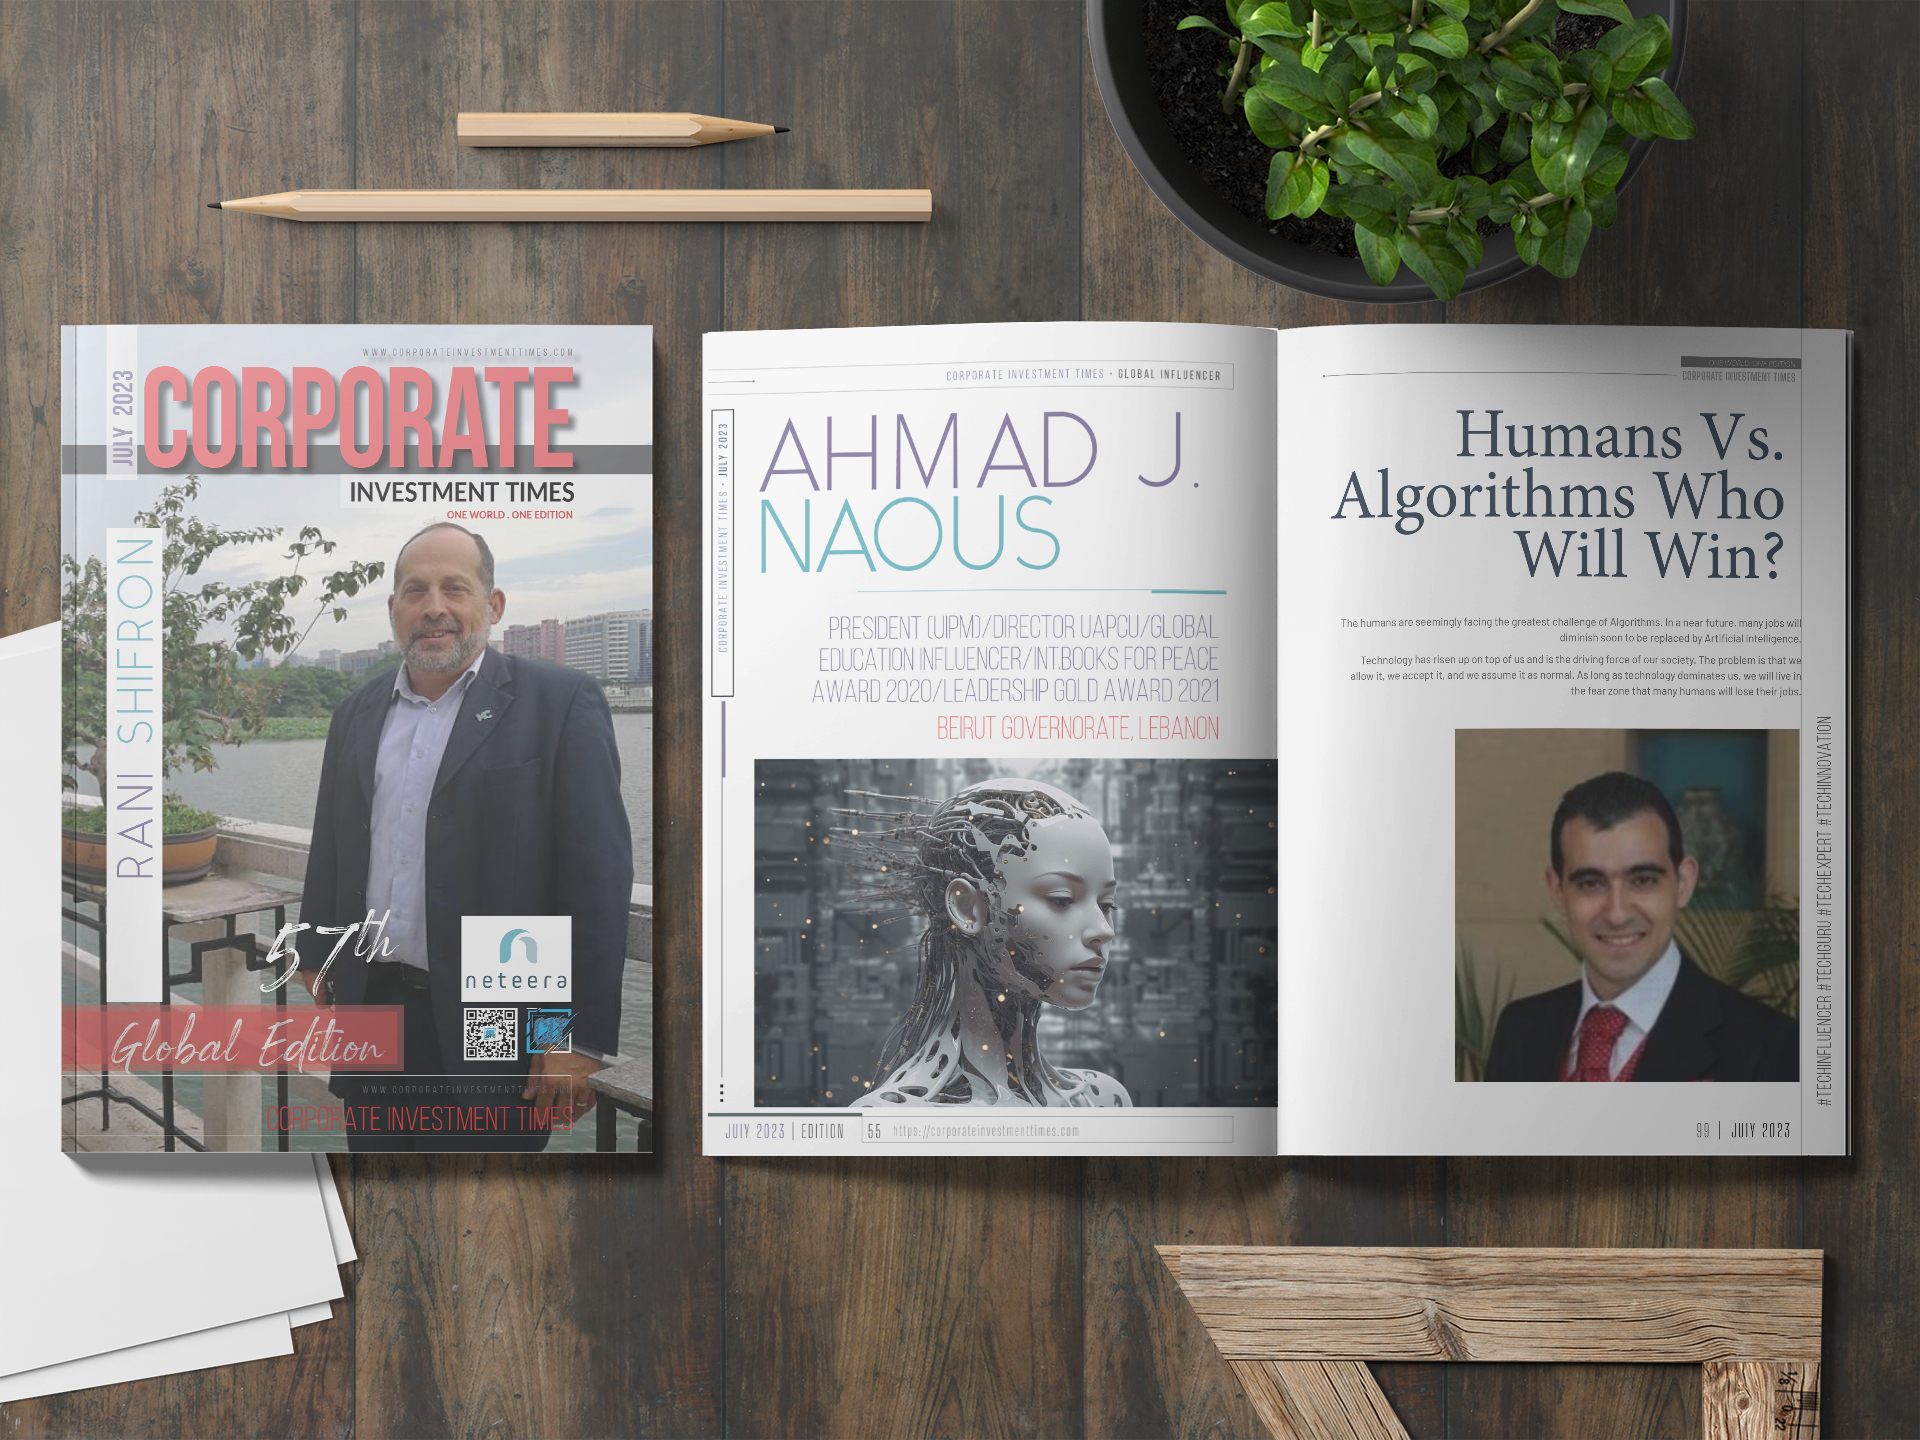 Humans Vs. Algorithms Who Will Win? - Dr. Ahmad J. Naous